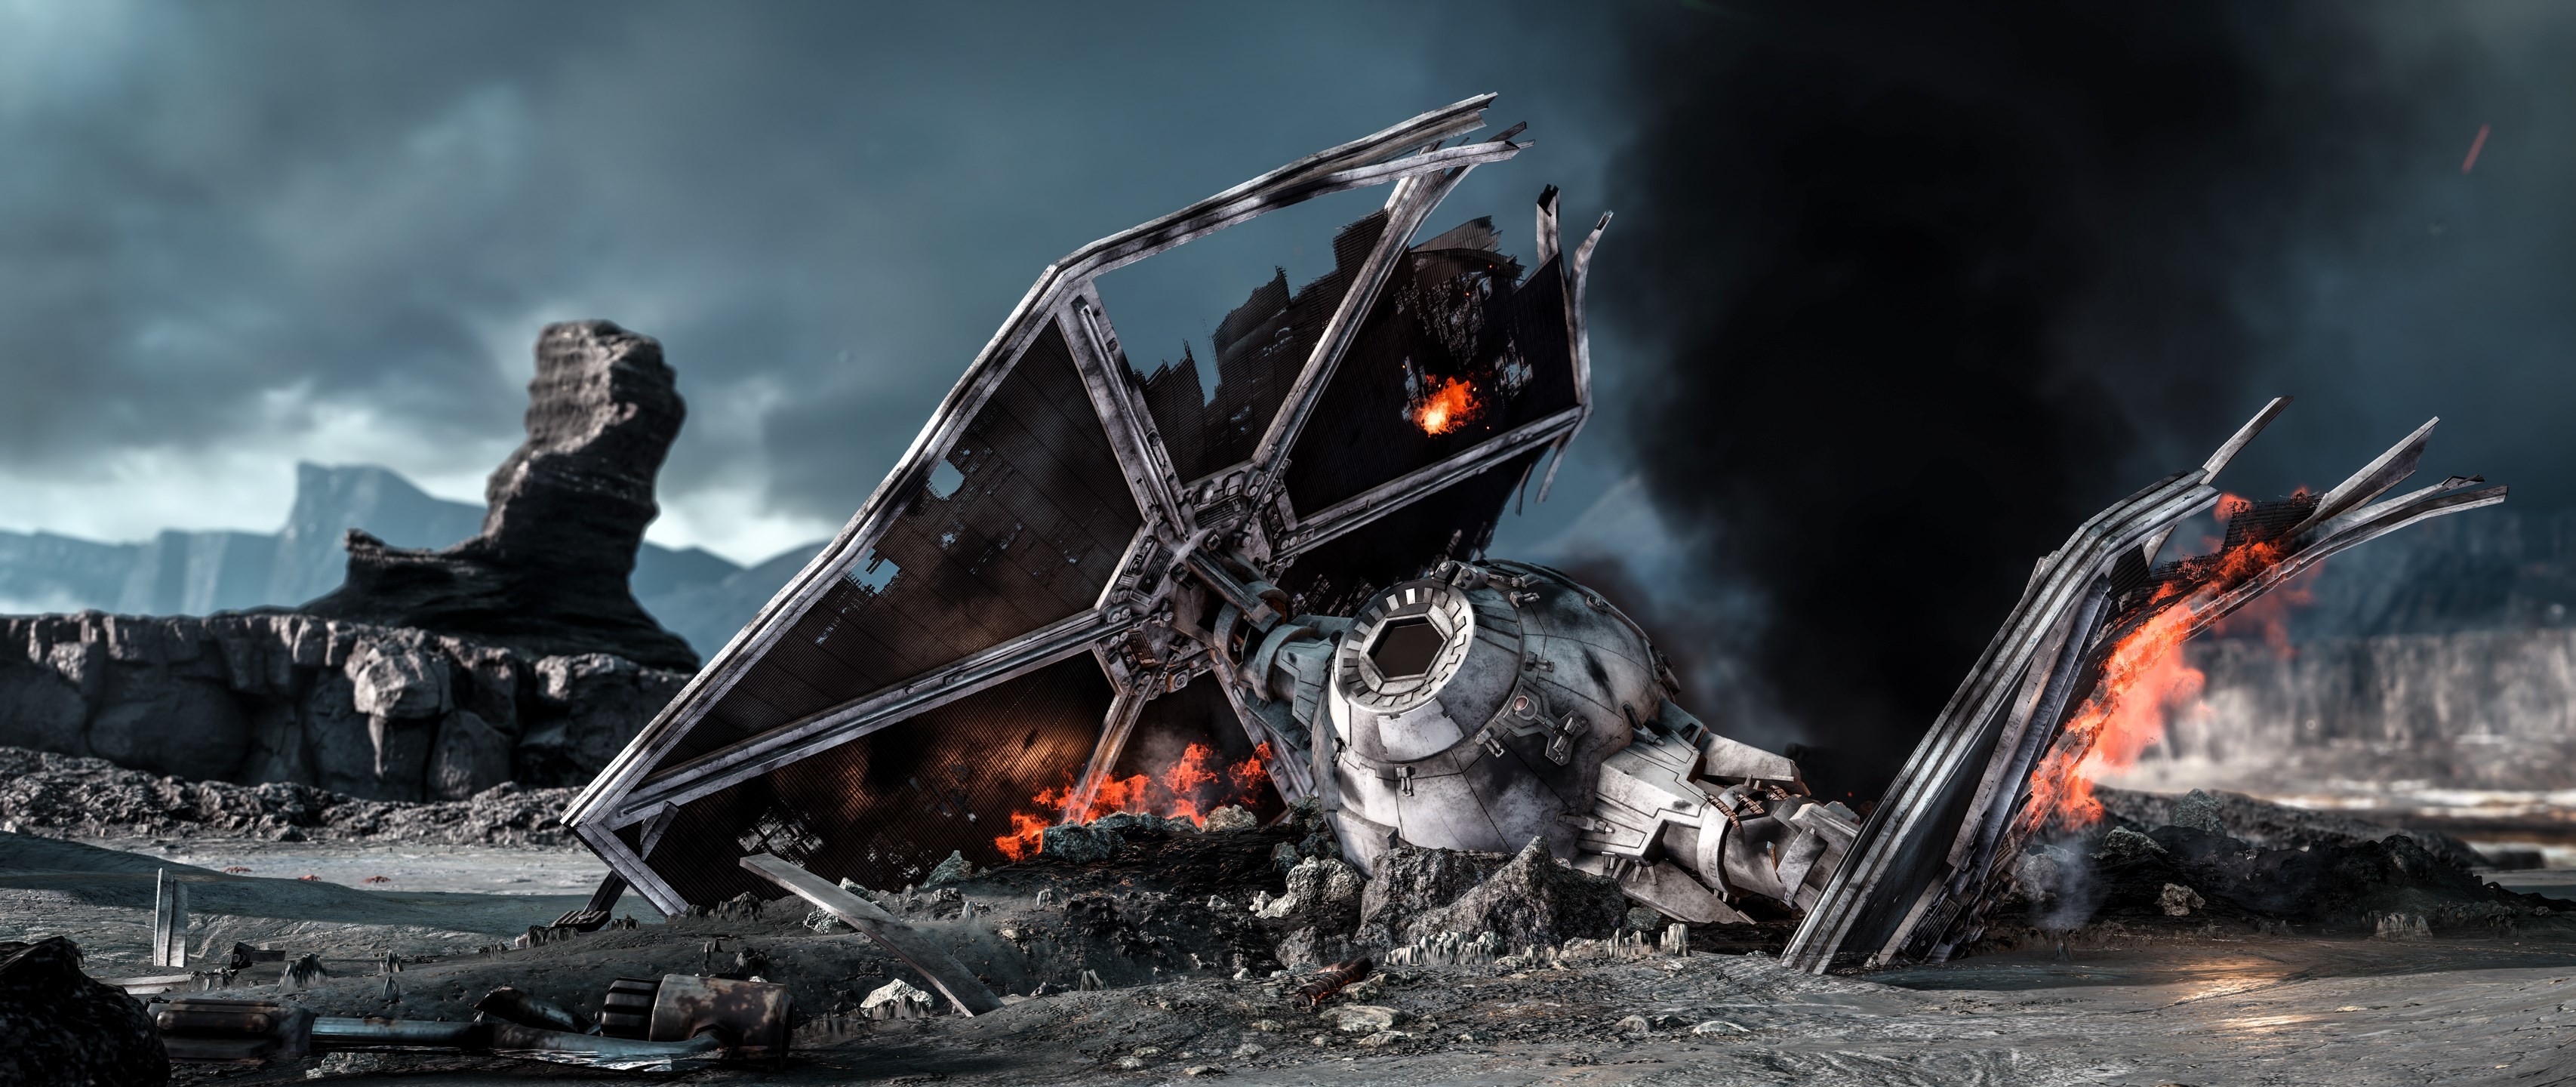 Star wars battlefront 2015 backround free hd widescreen – star wars battlefront 2015 category